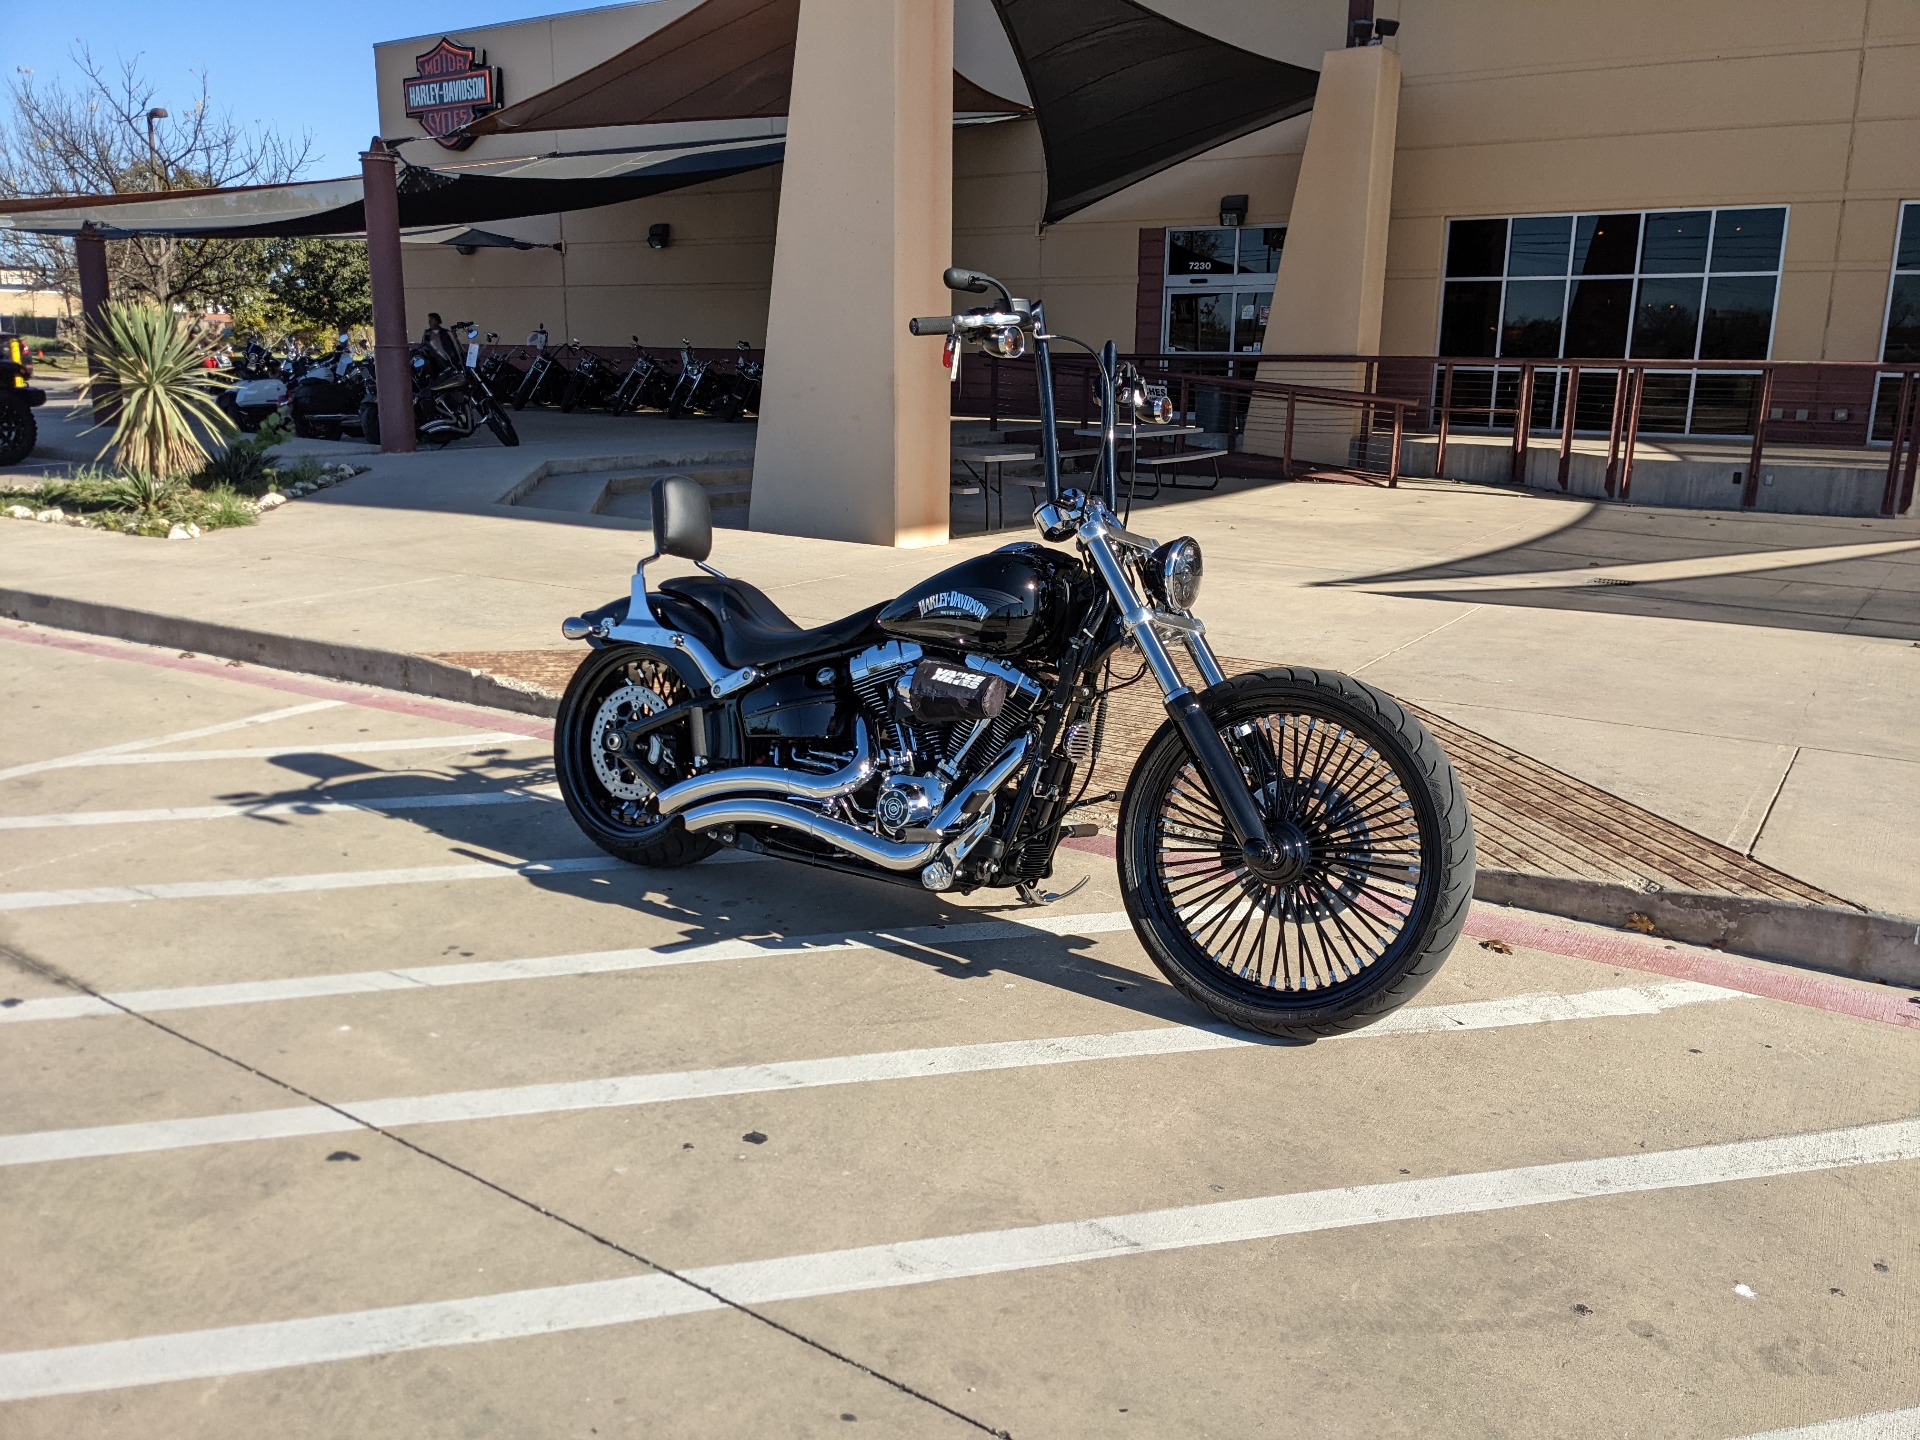 2016 Harley-Davidson Breakout® in San Antonio, Texas - Photo 2